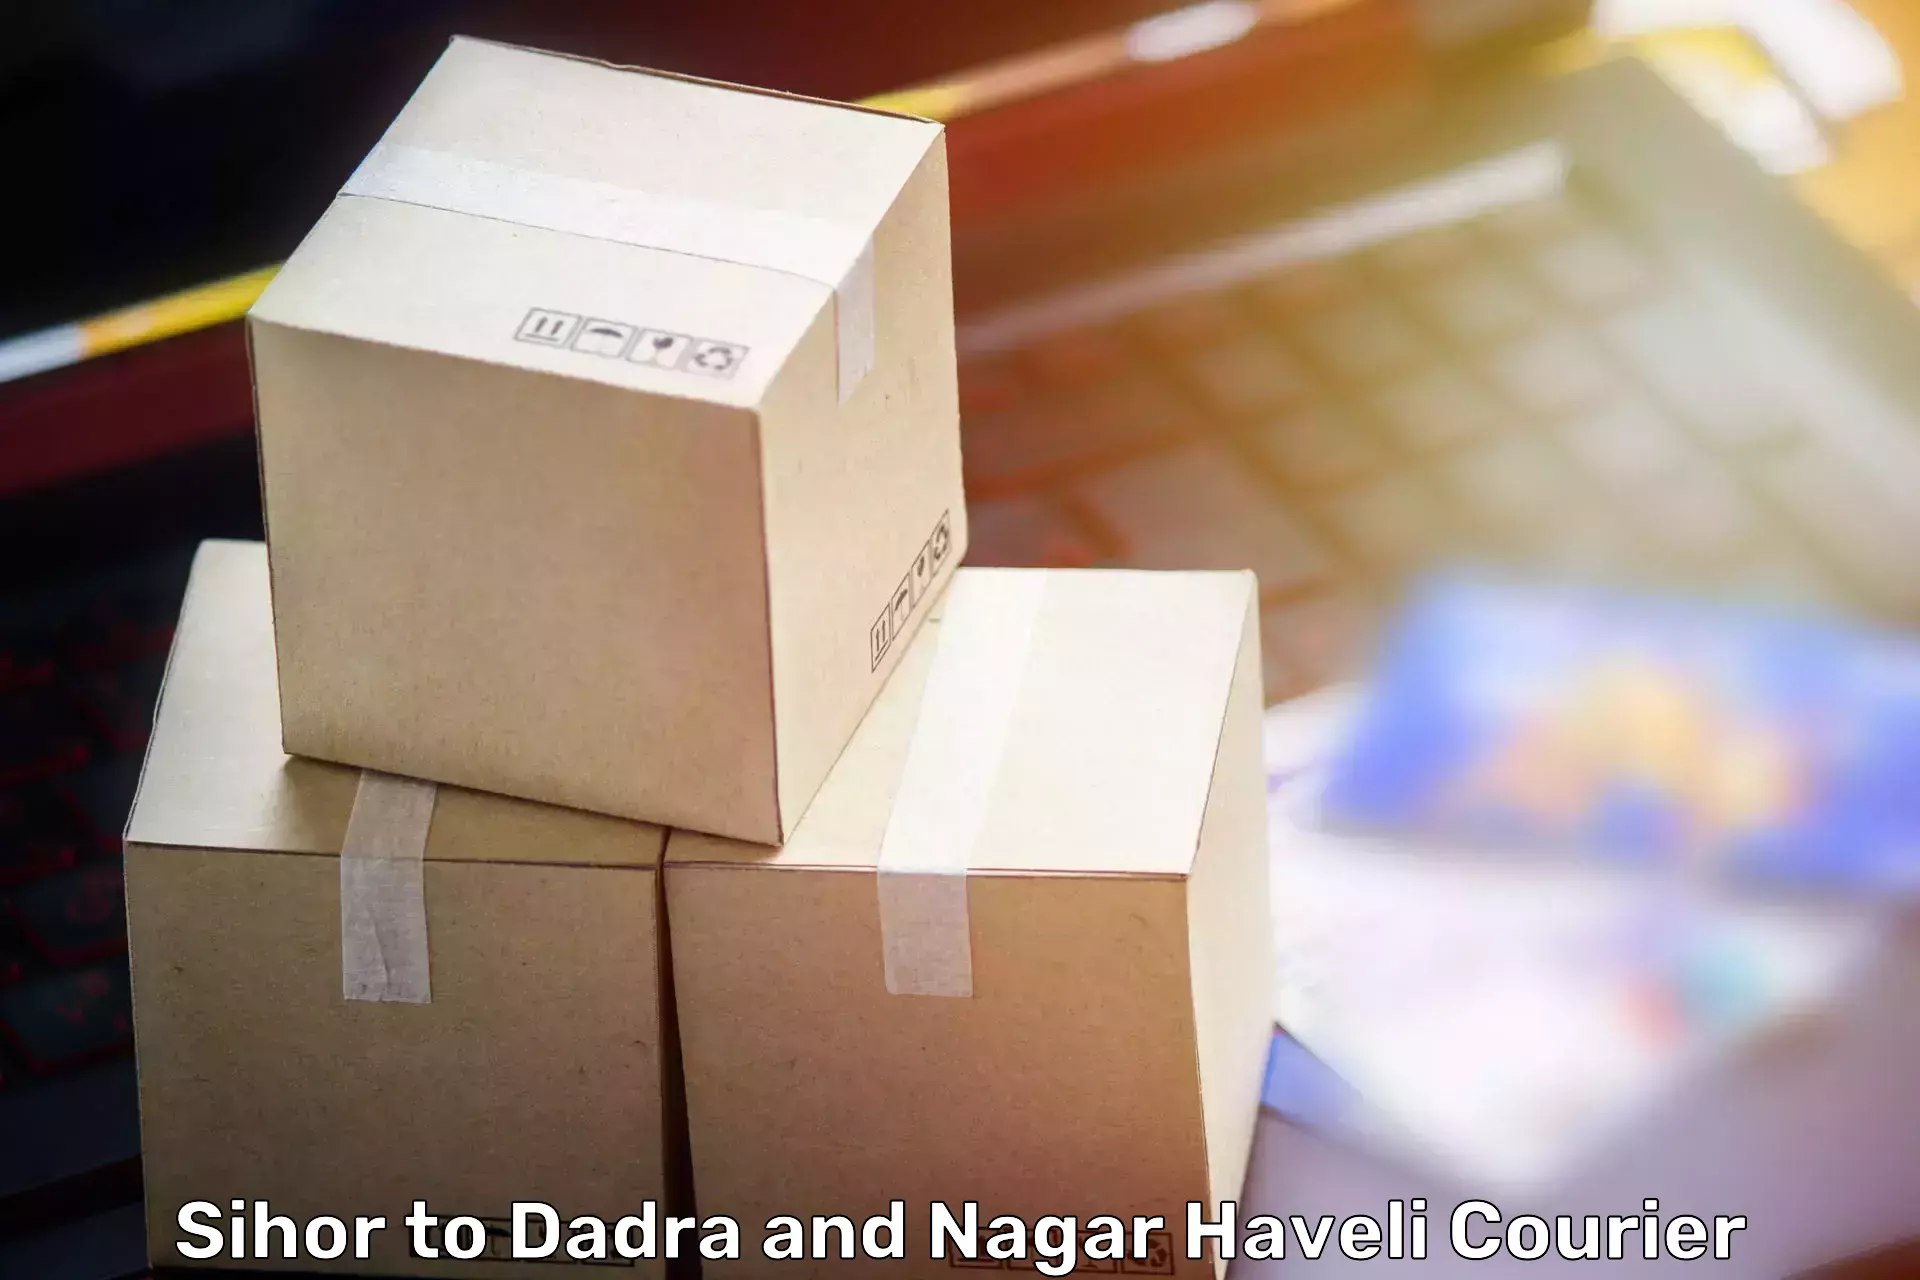 Furniture moving experts Sihor to Dadra and Nagar Haveli